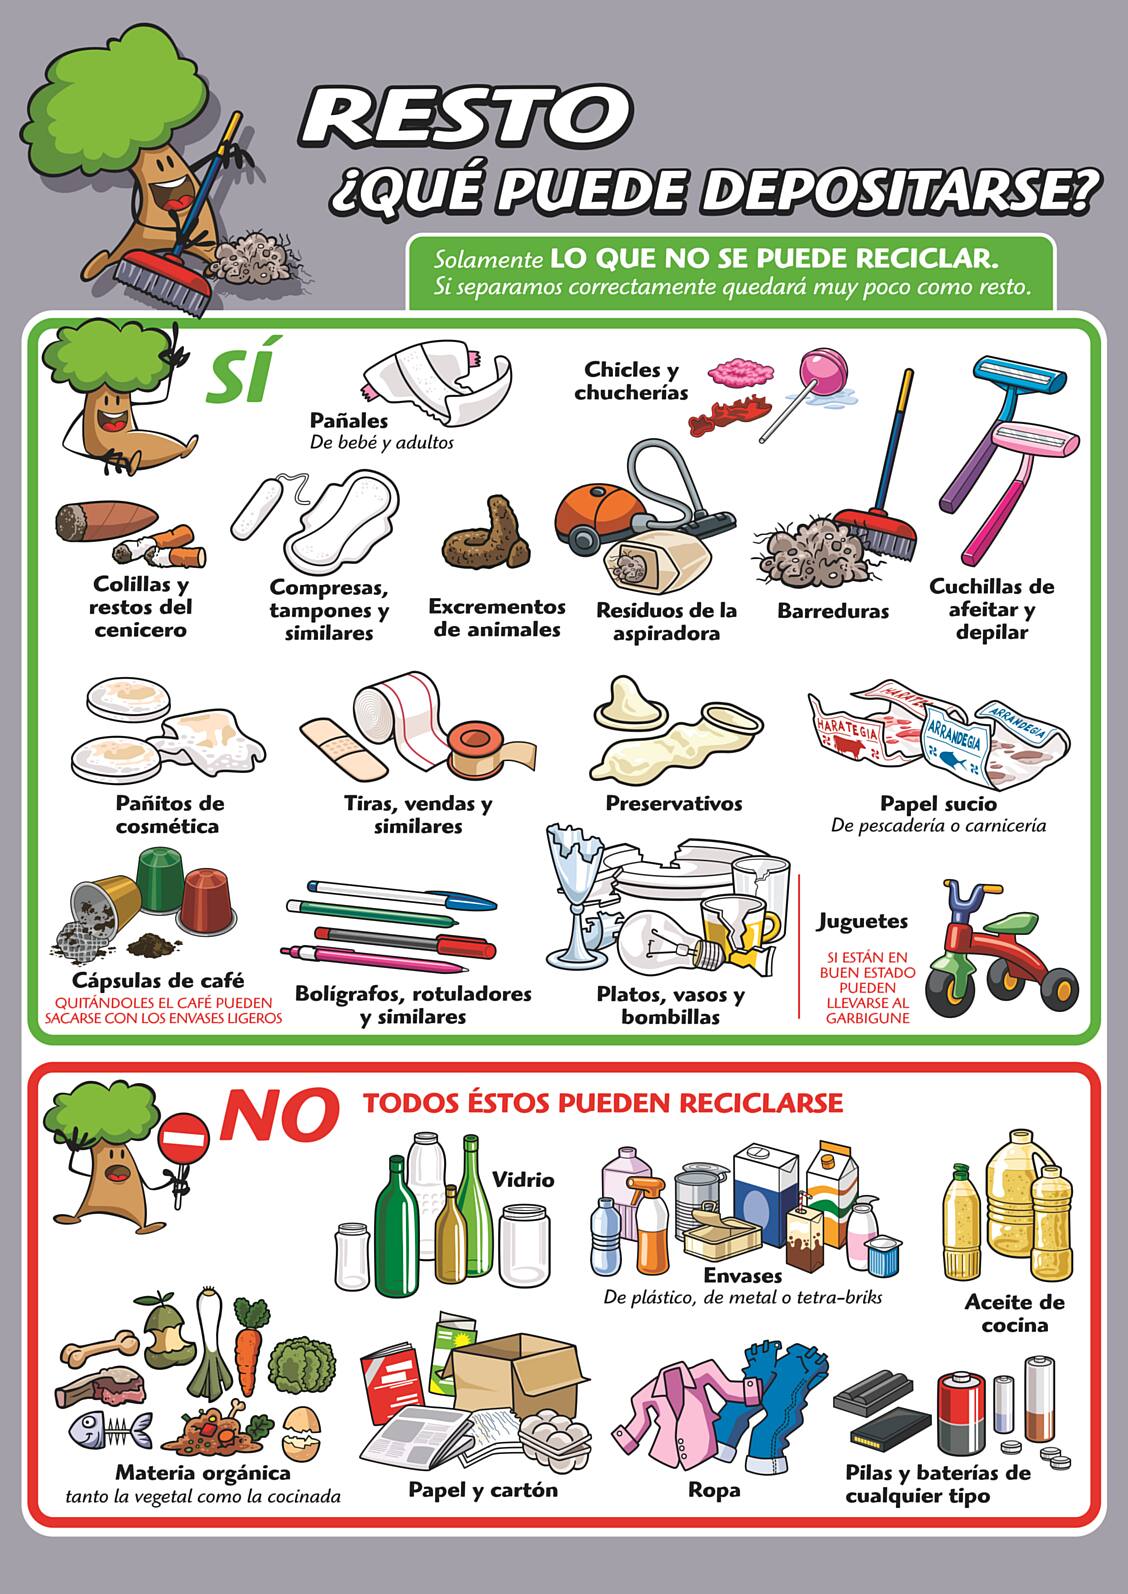 Guía de residuos - Resto